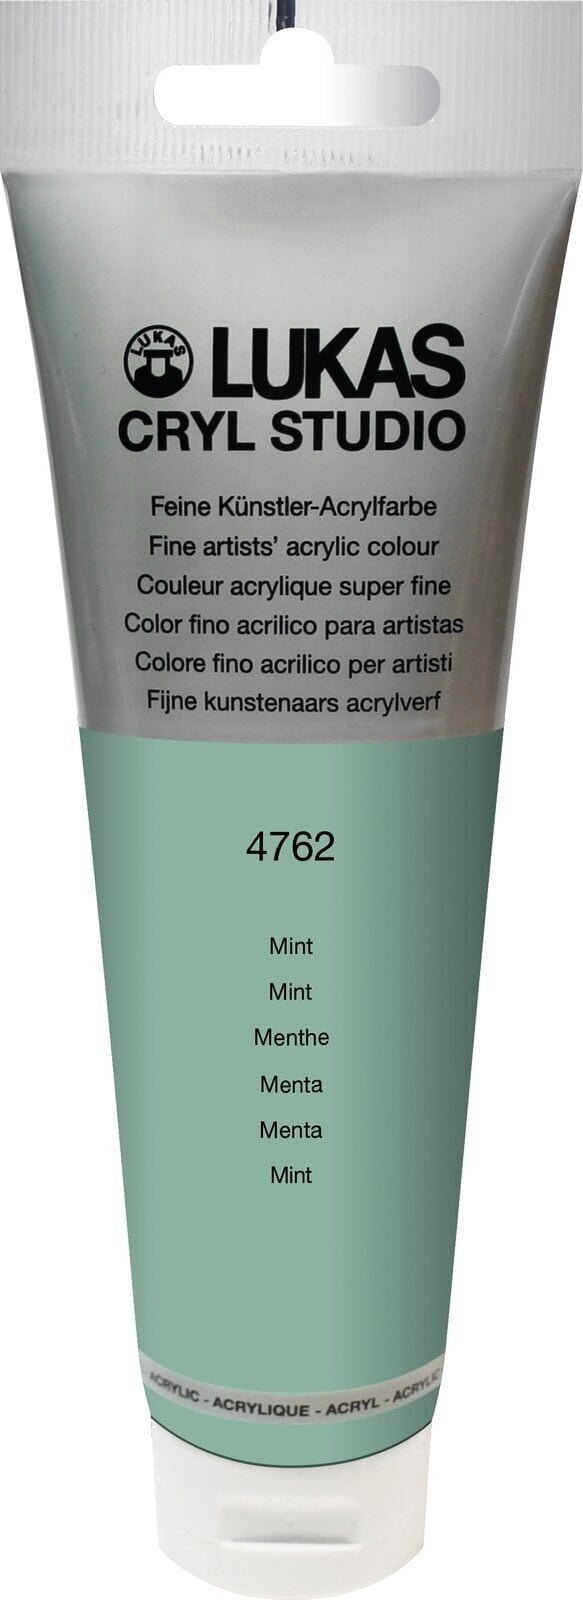 Akrylová farba Lukas Cryl Studio Acrylic Paint Plastic Tube Akrylová farba Mint 125 ml 1 ks